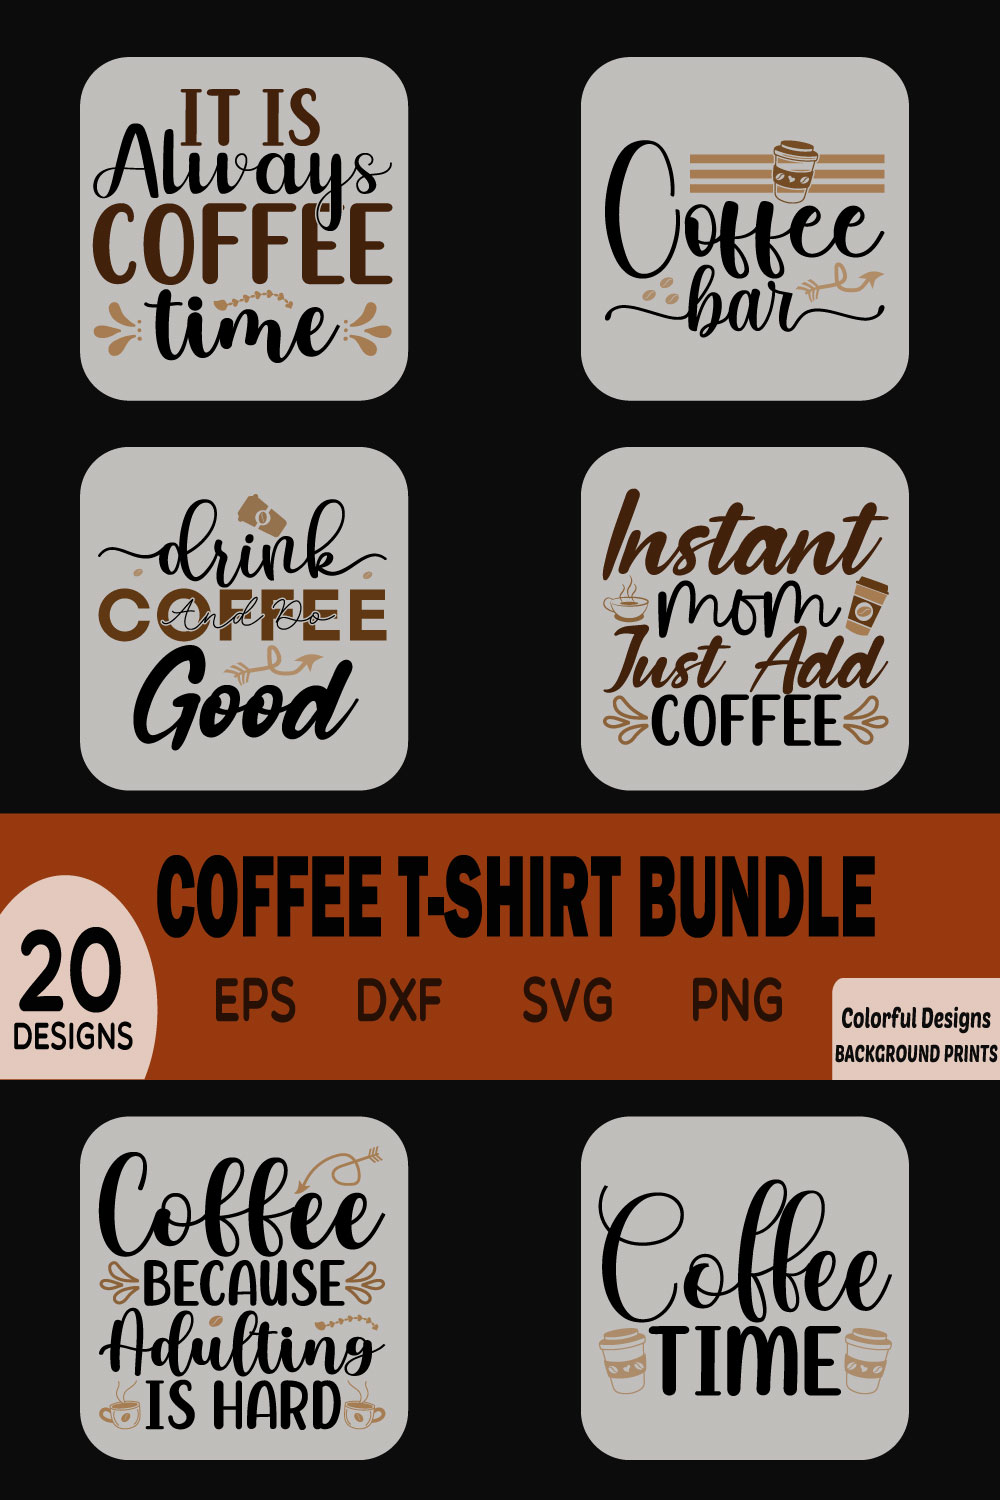 Coffee t-shirt design Bundle pinterest preview image.